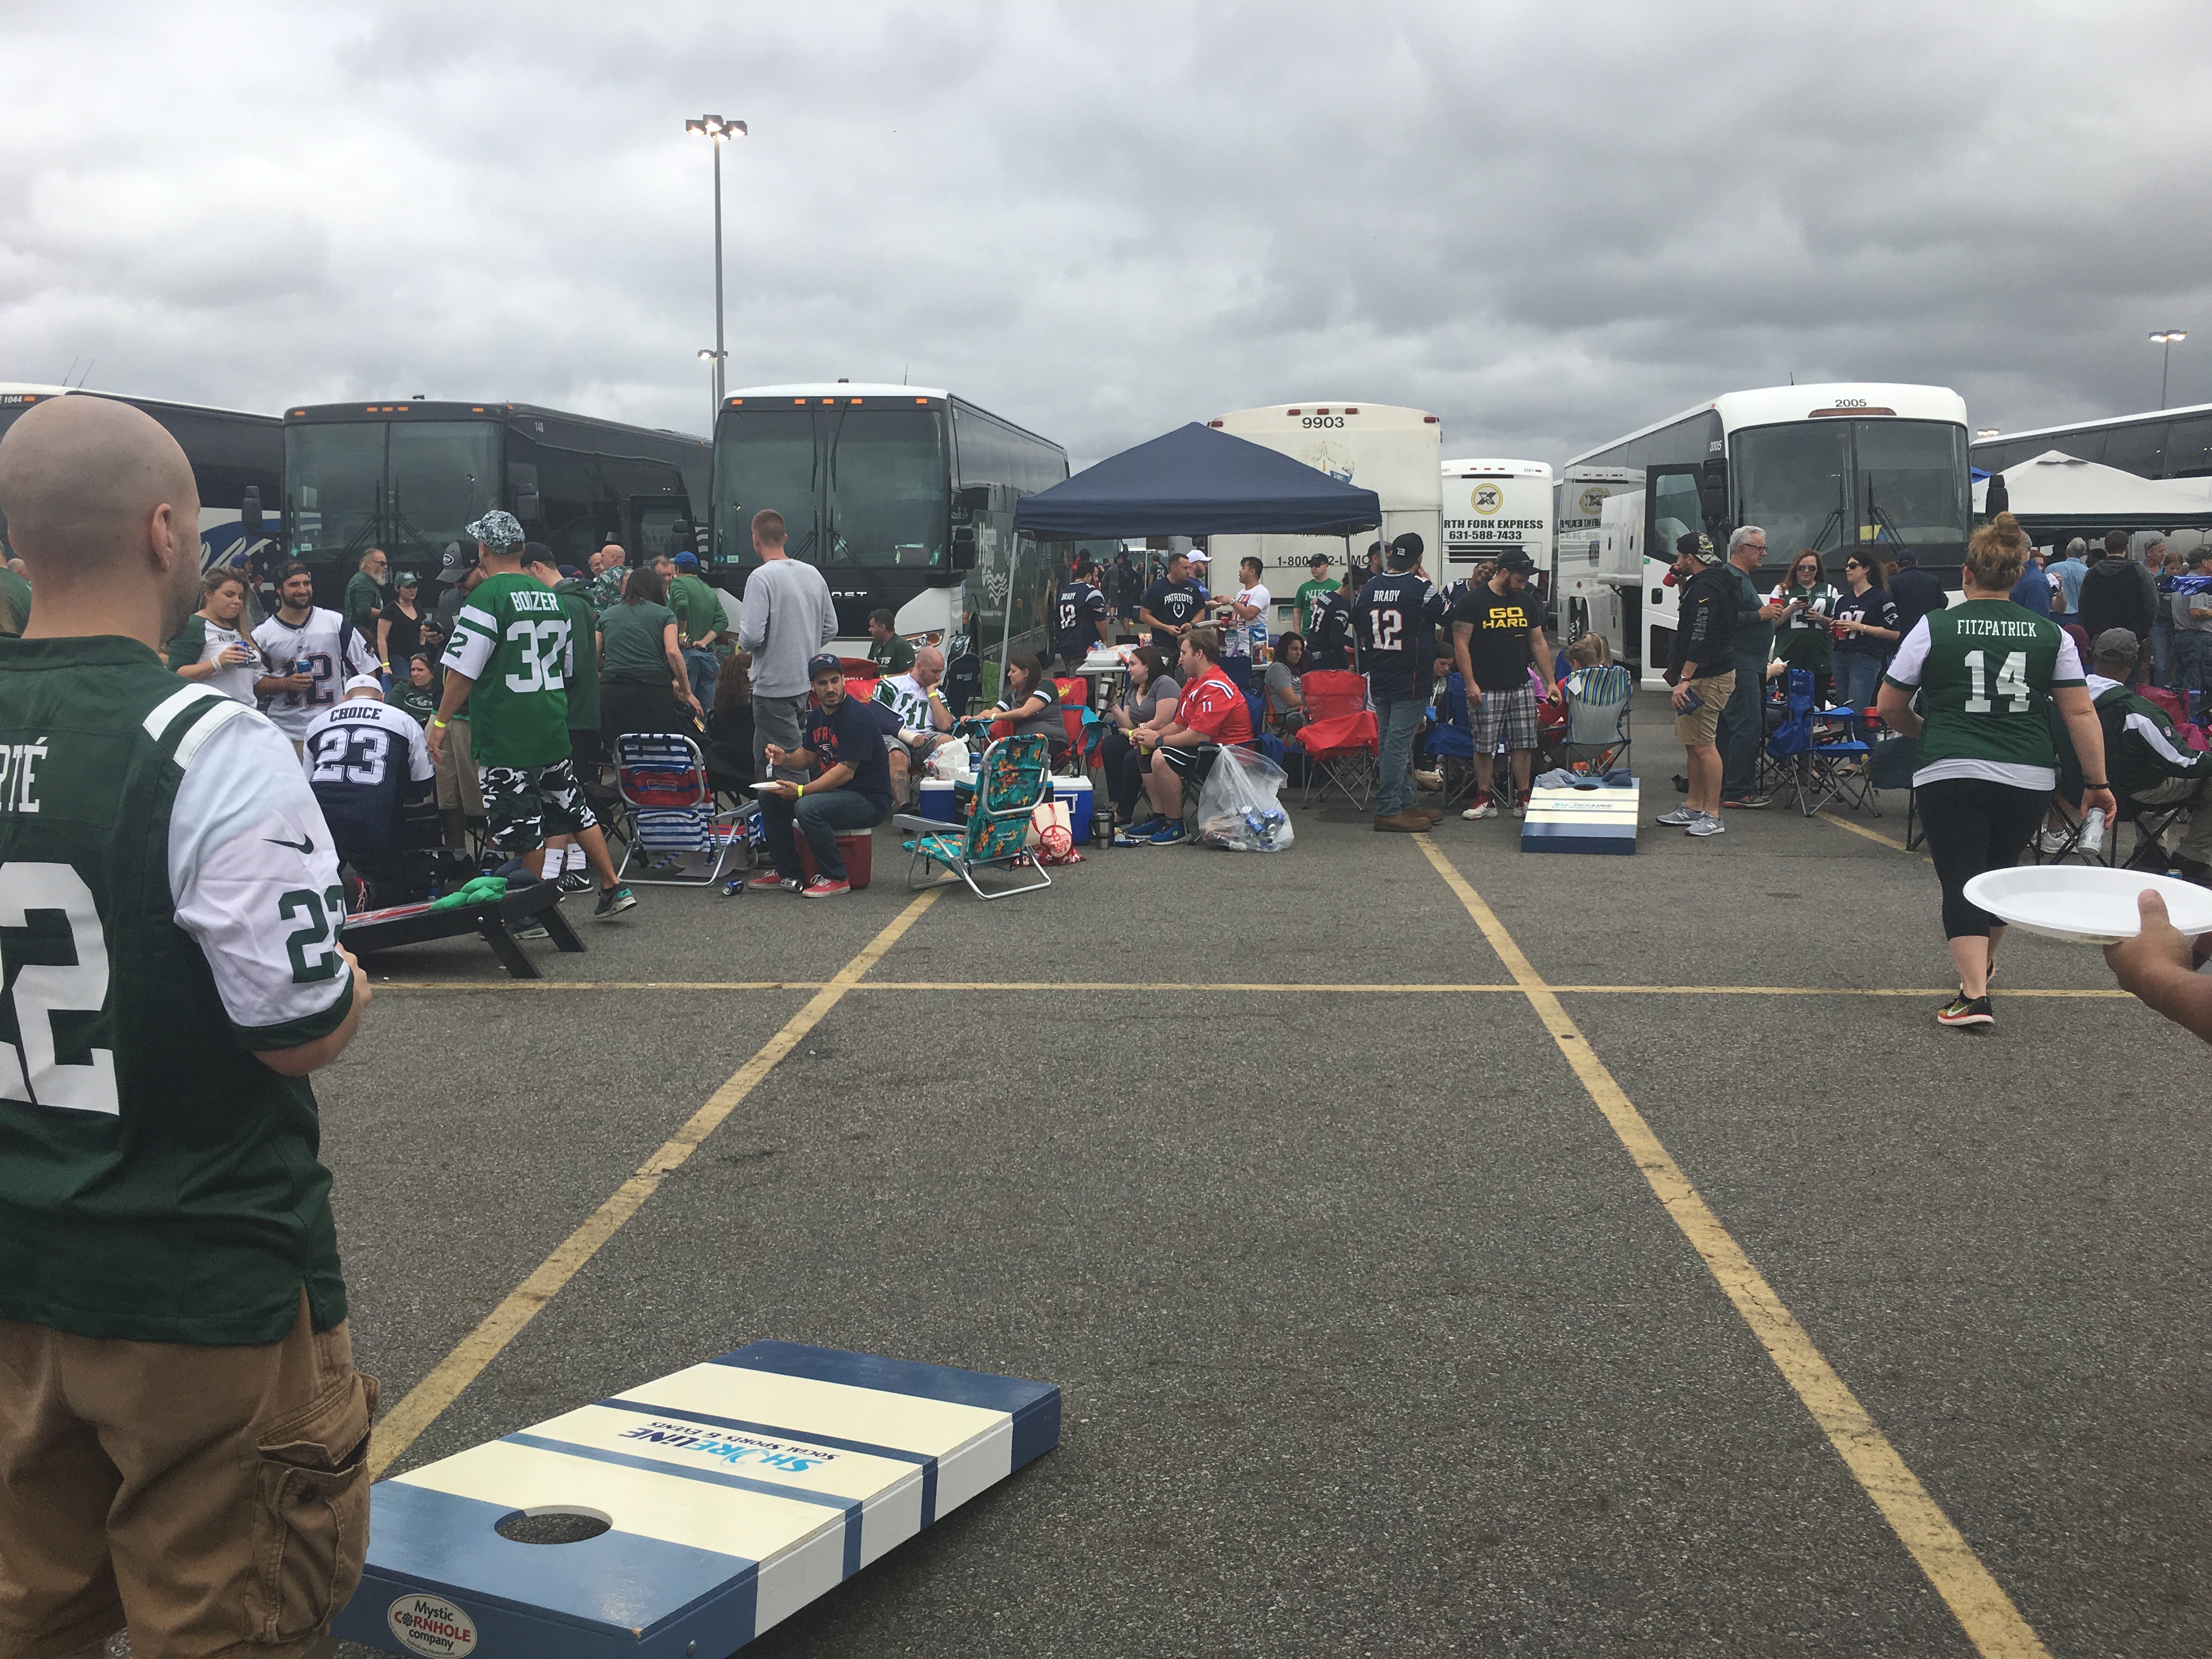 Shoreline Social Sports & Events: Patriots vs Jets at Met Life Stadium